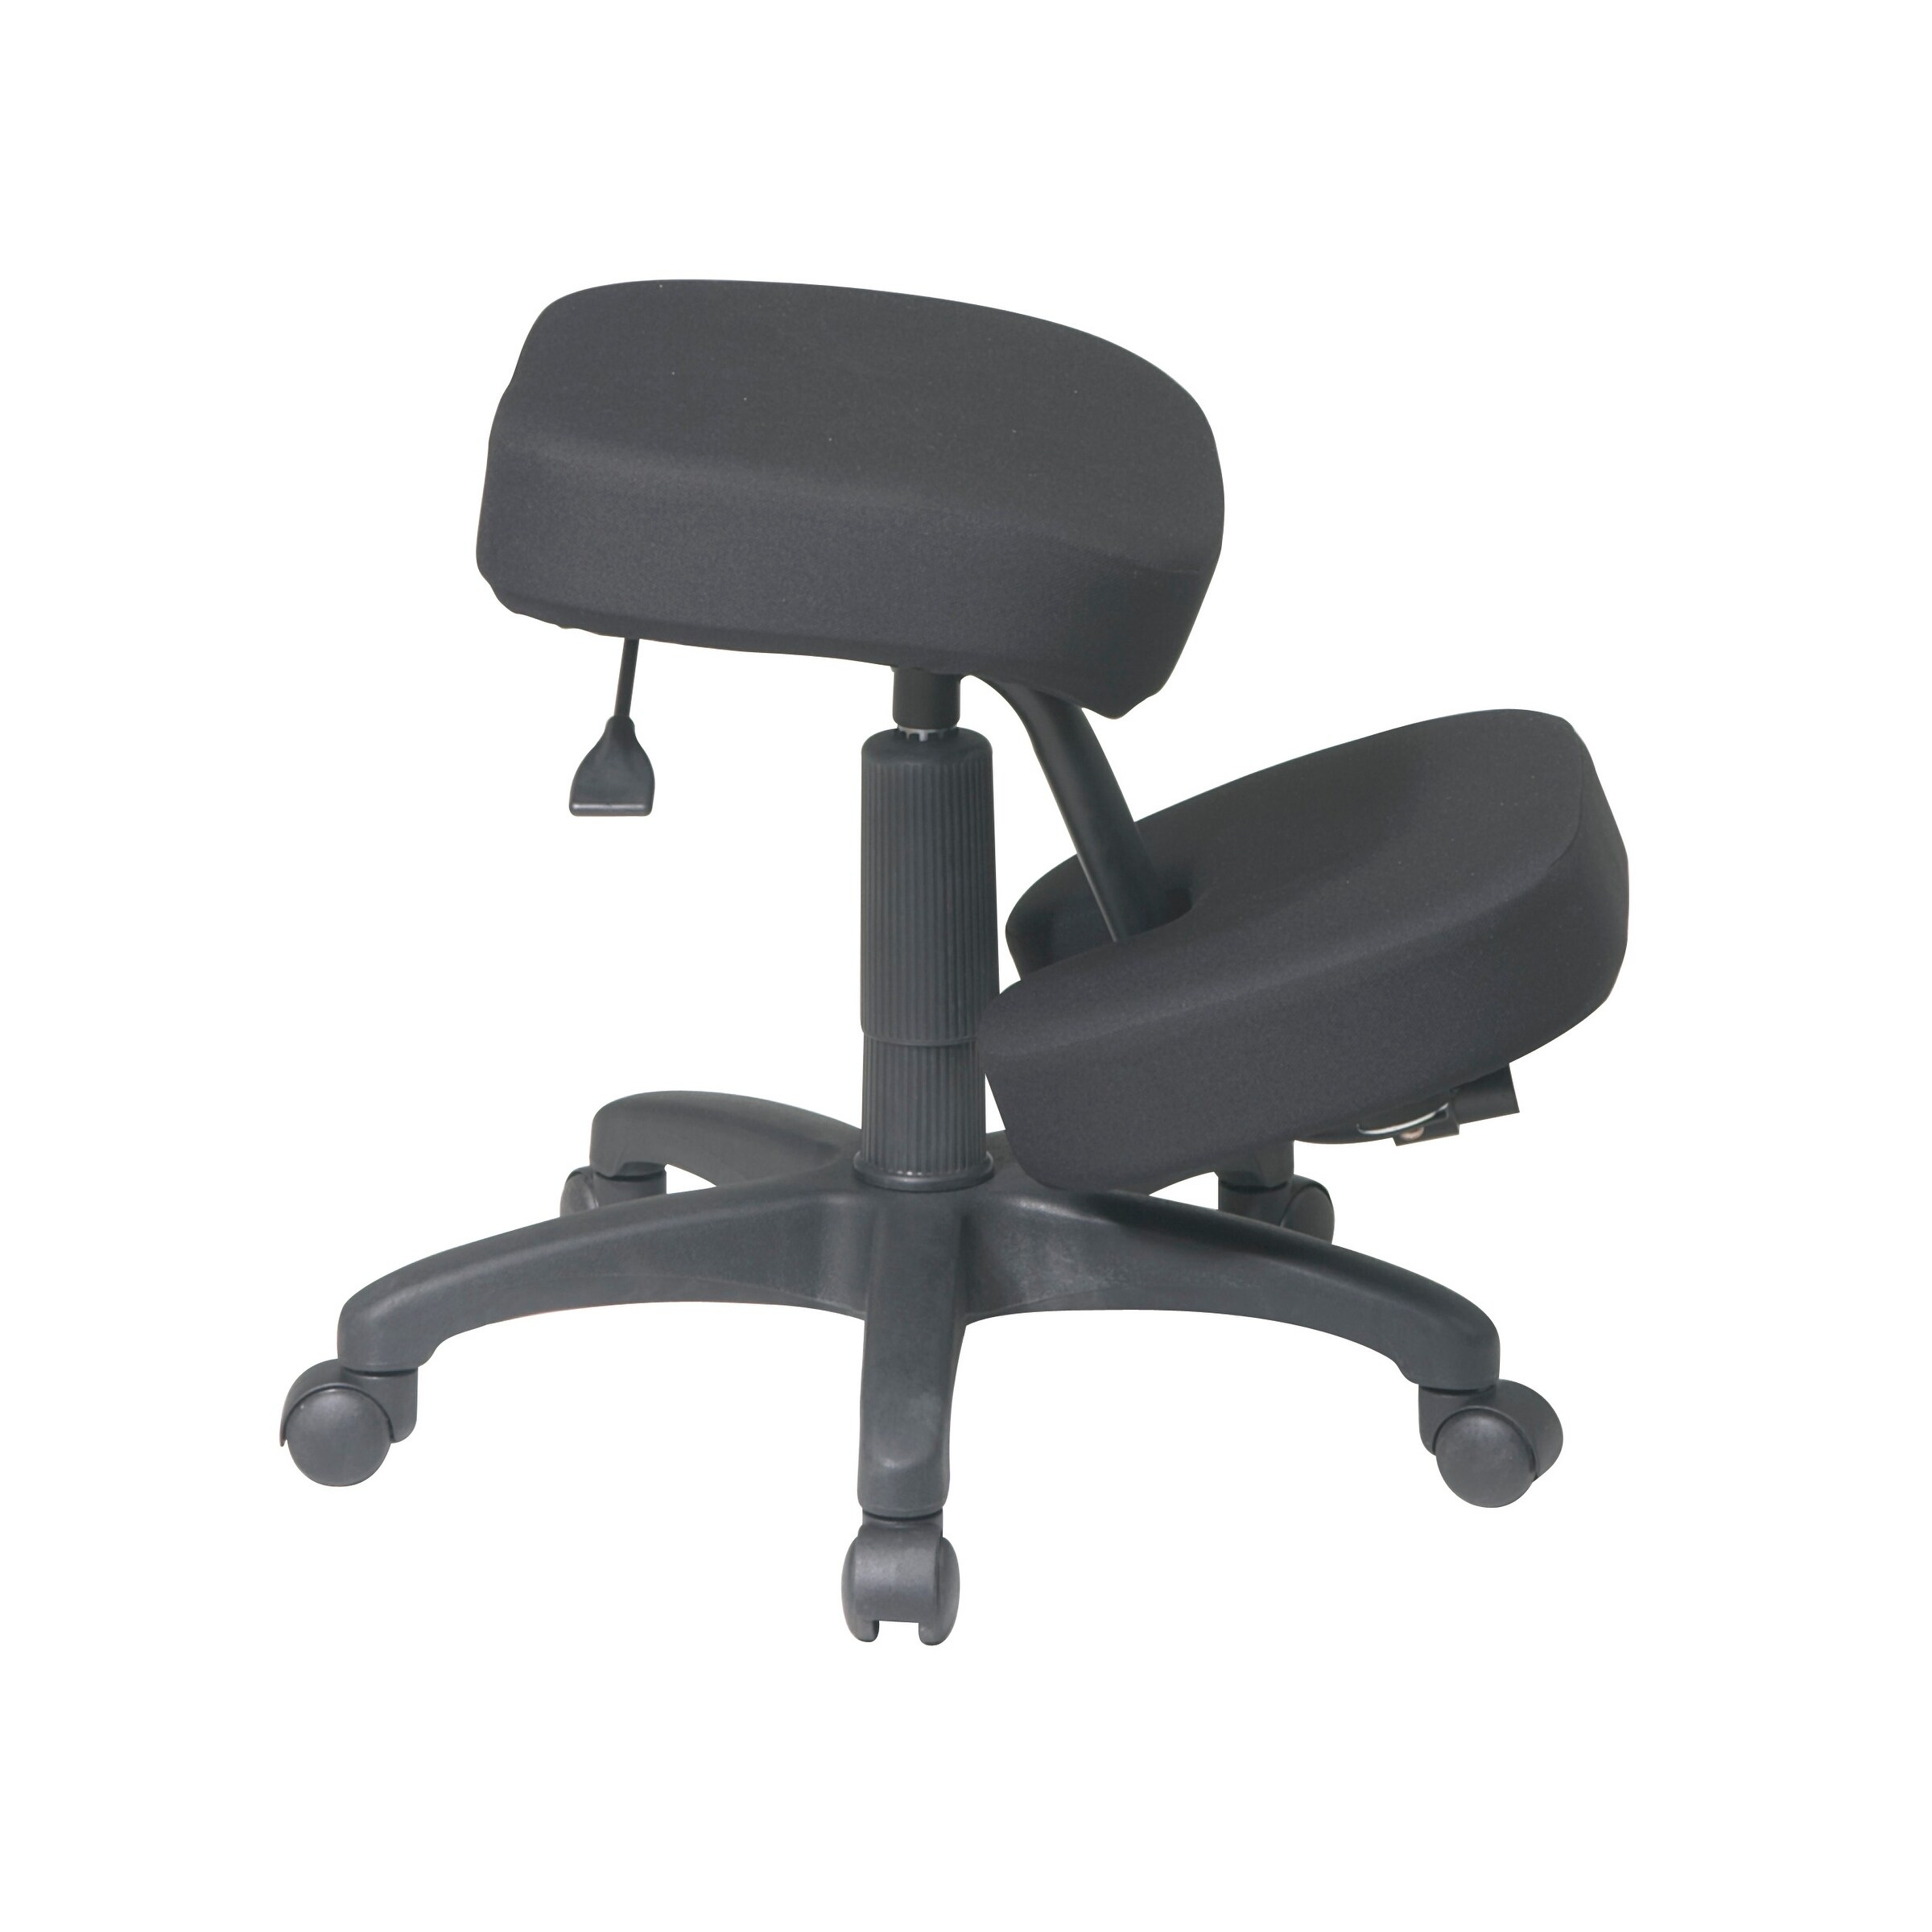 Black Ergonomic Kneeling Posture Chair Espresso Wood Base Memory Foam Office New 